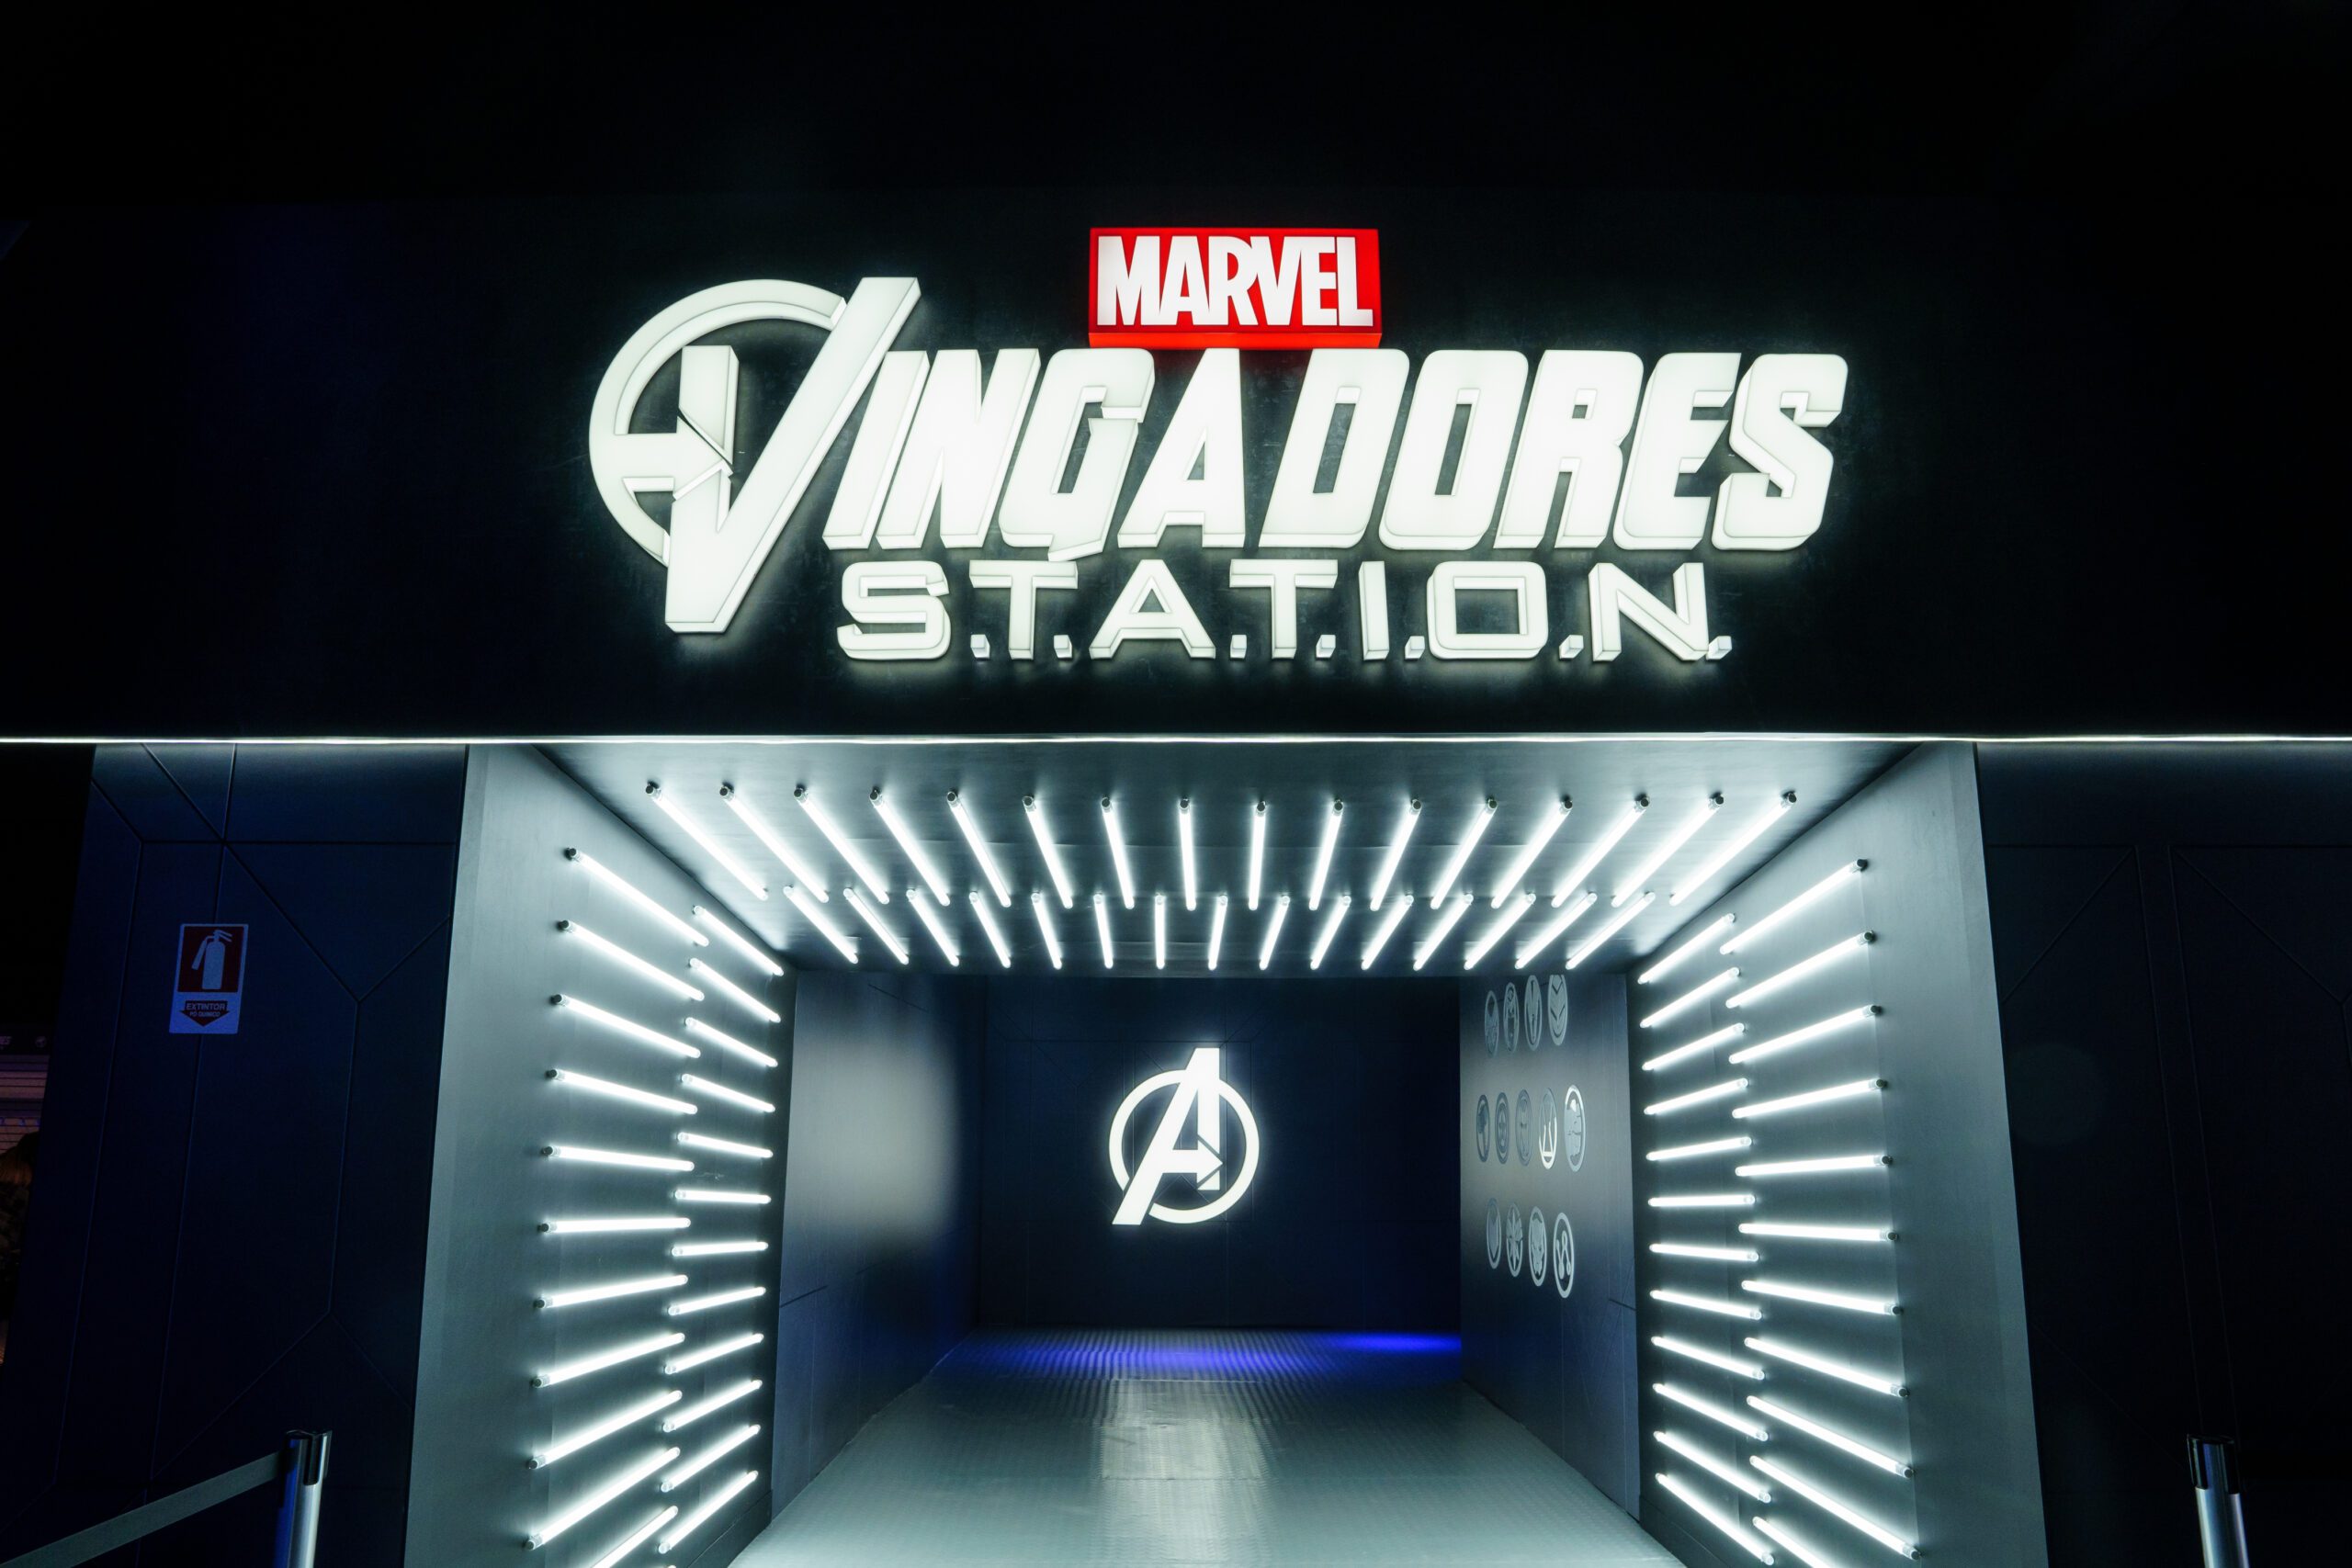 Marvel Vingadores Station